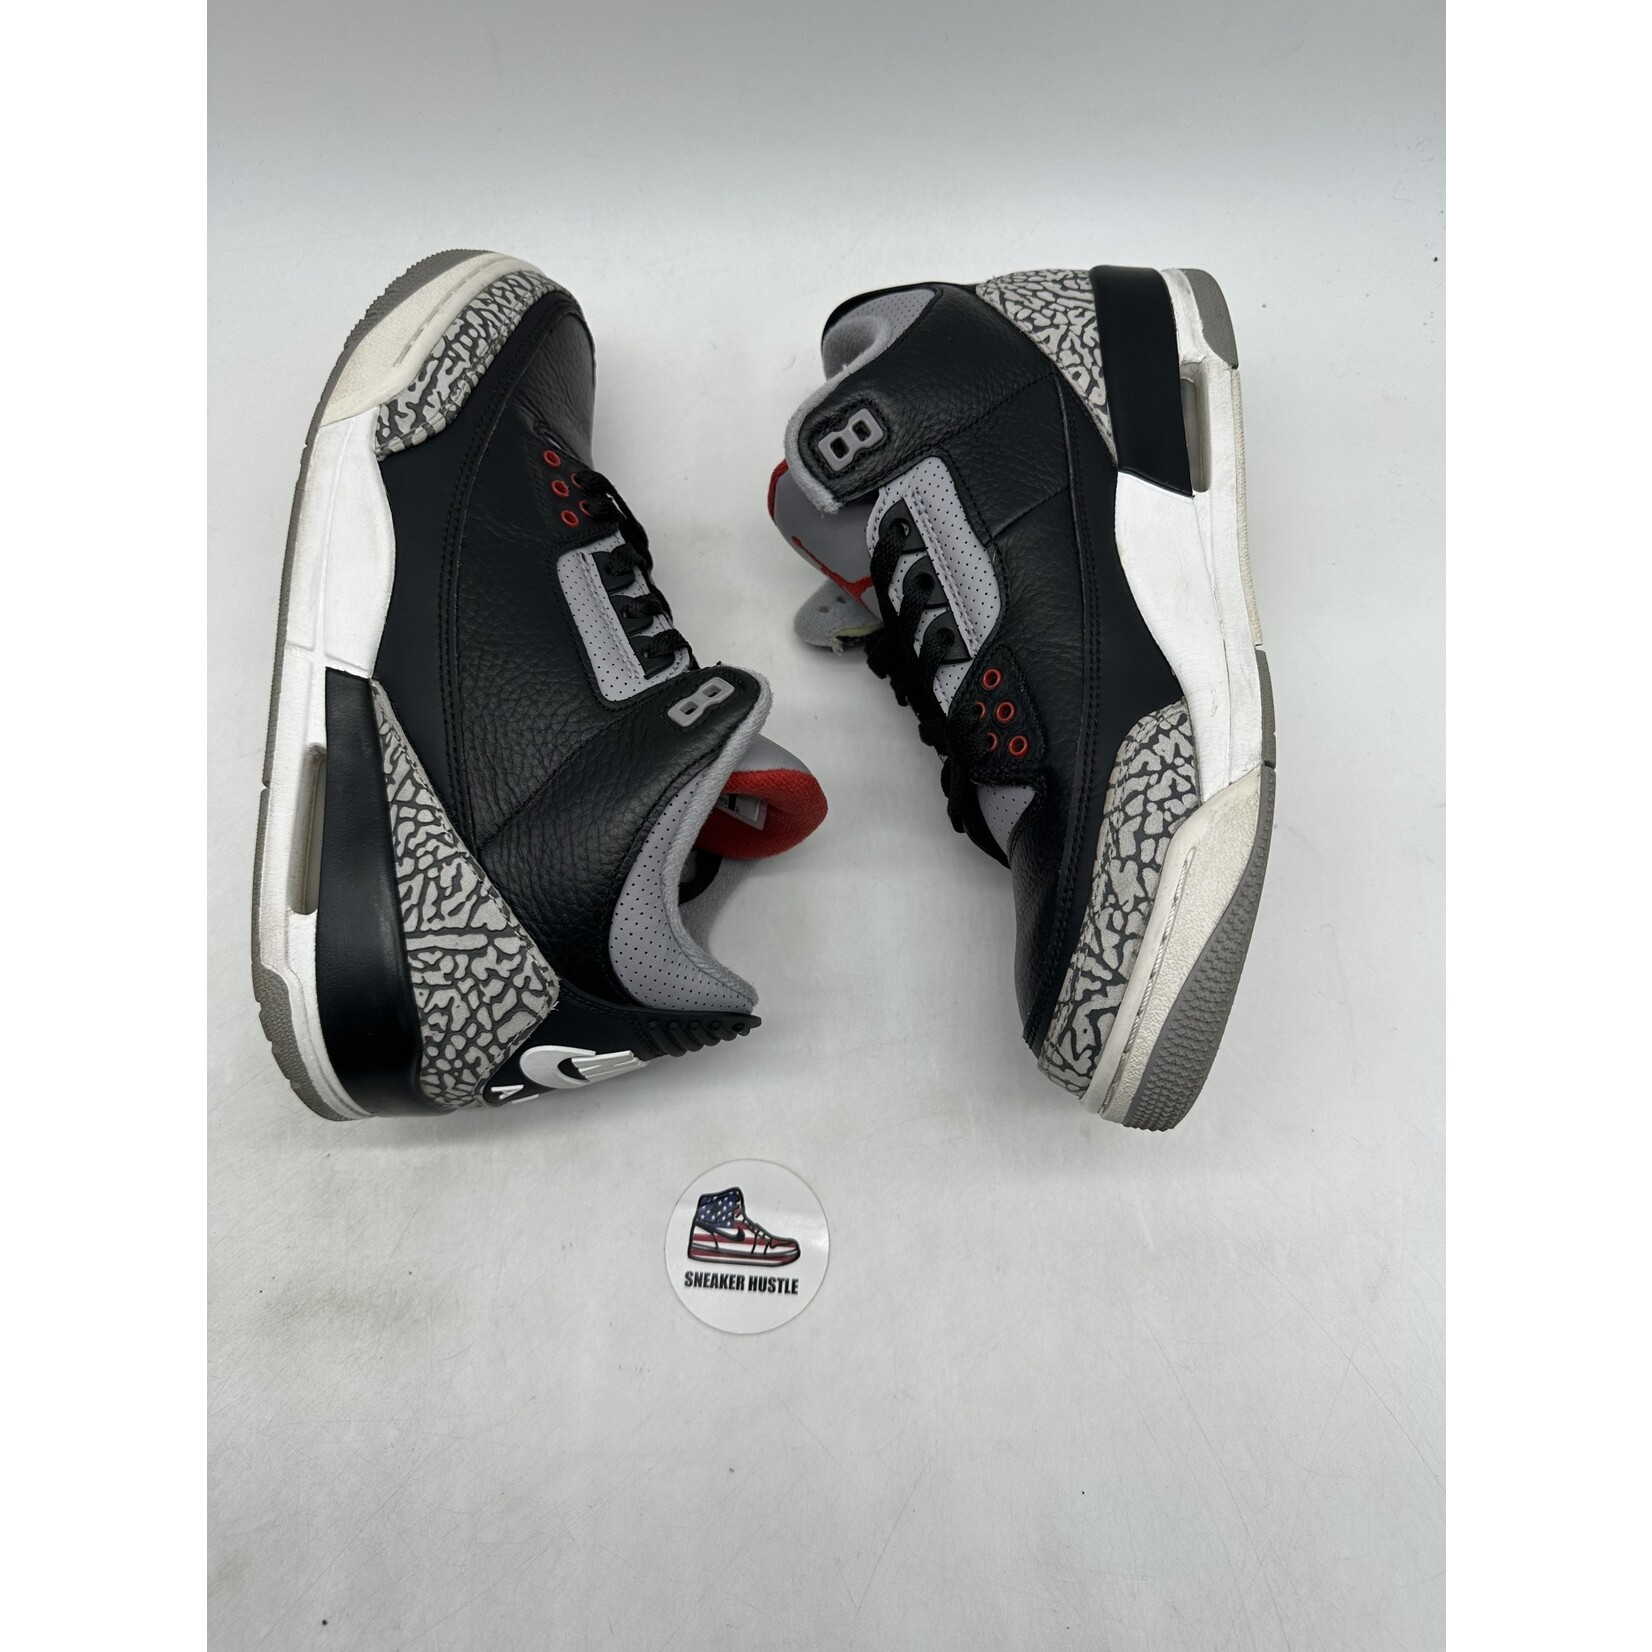 Air Jordan Jordan 3 Retro Black Cement (2018)